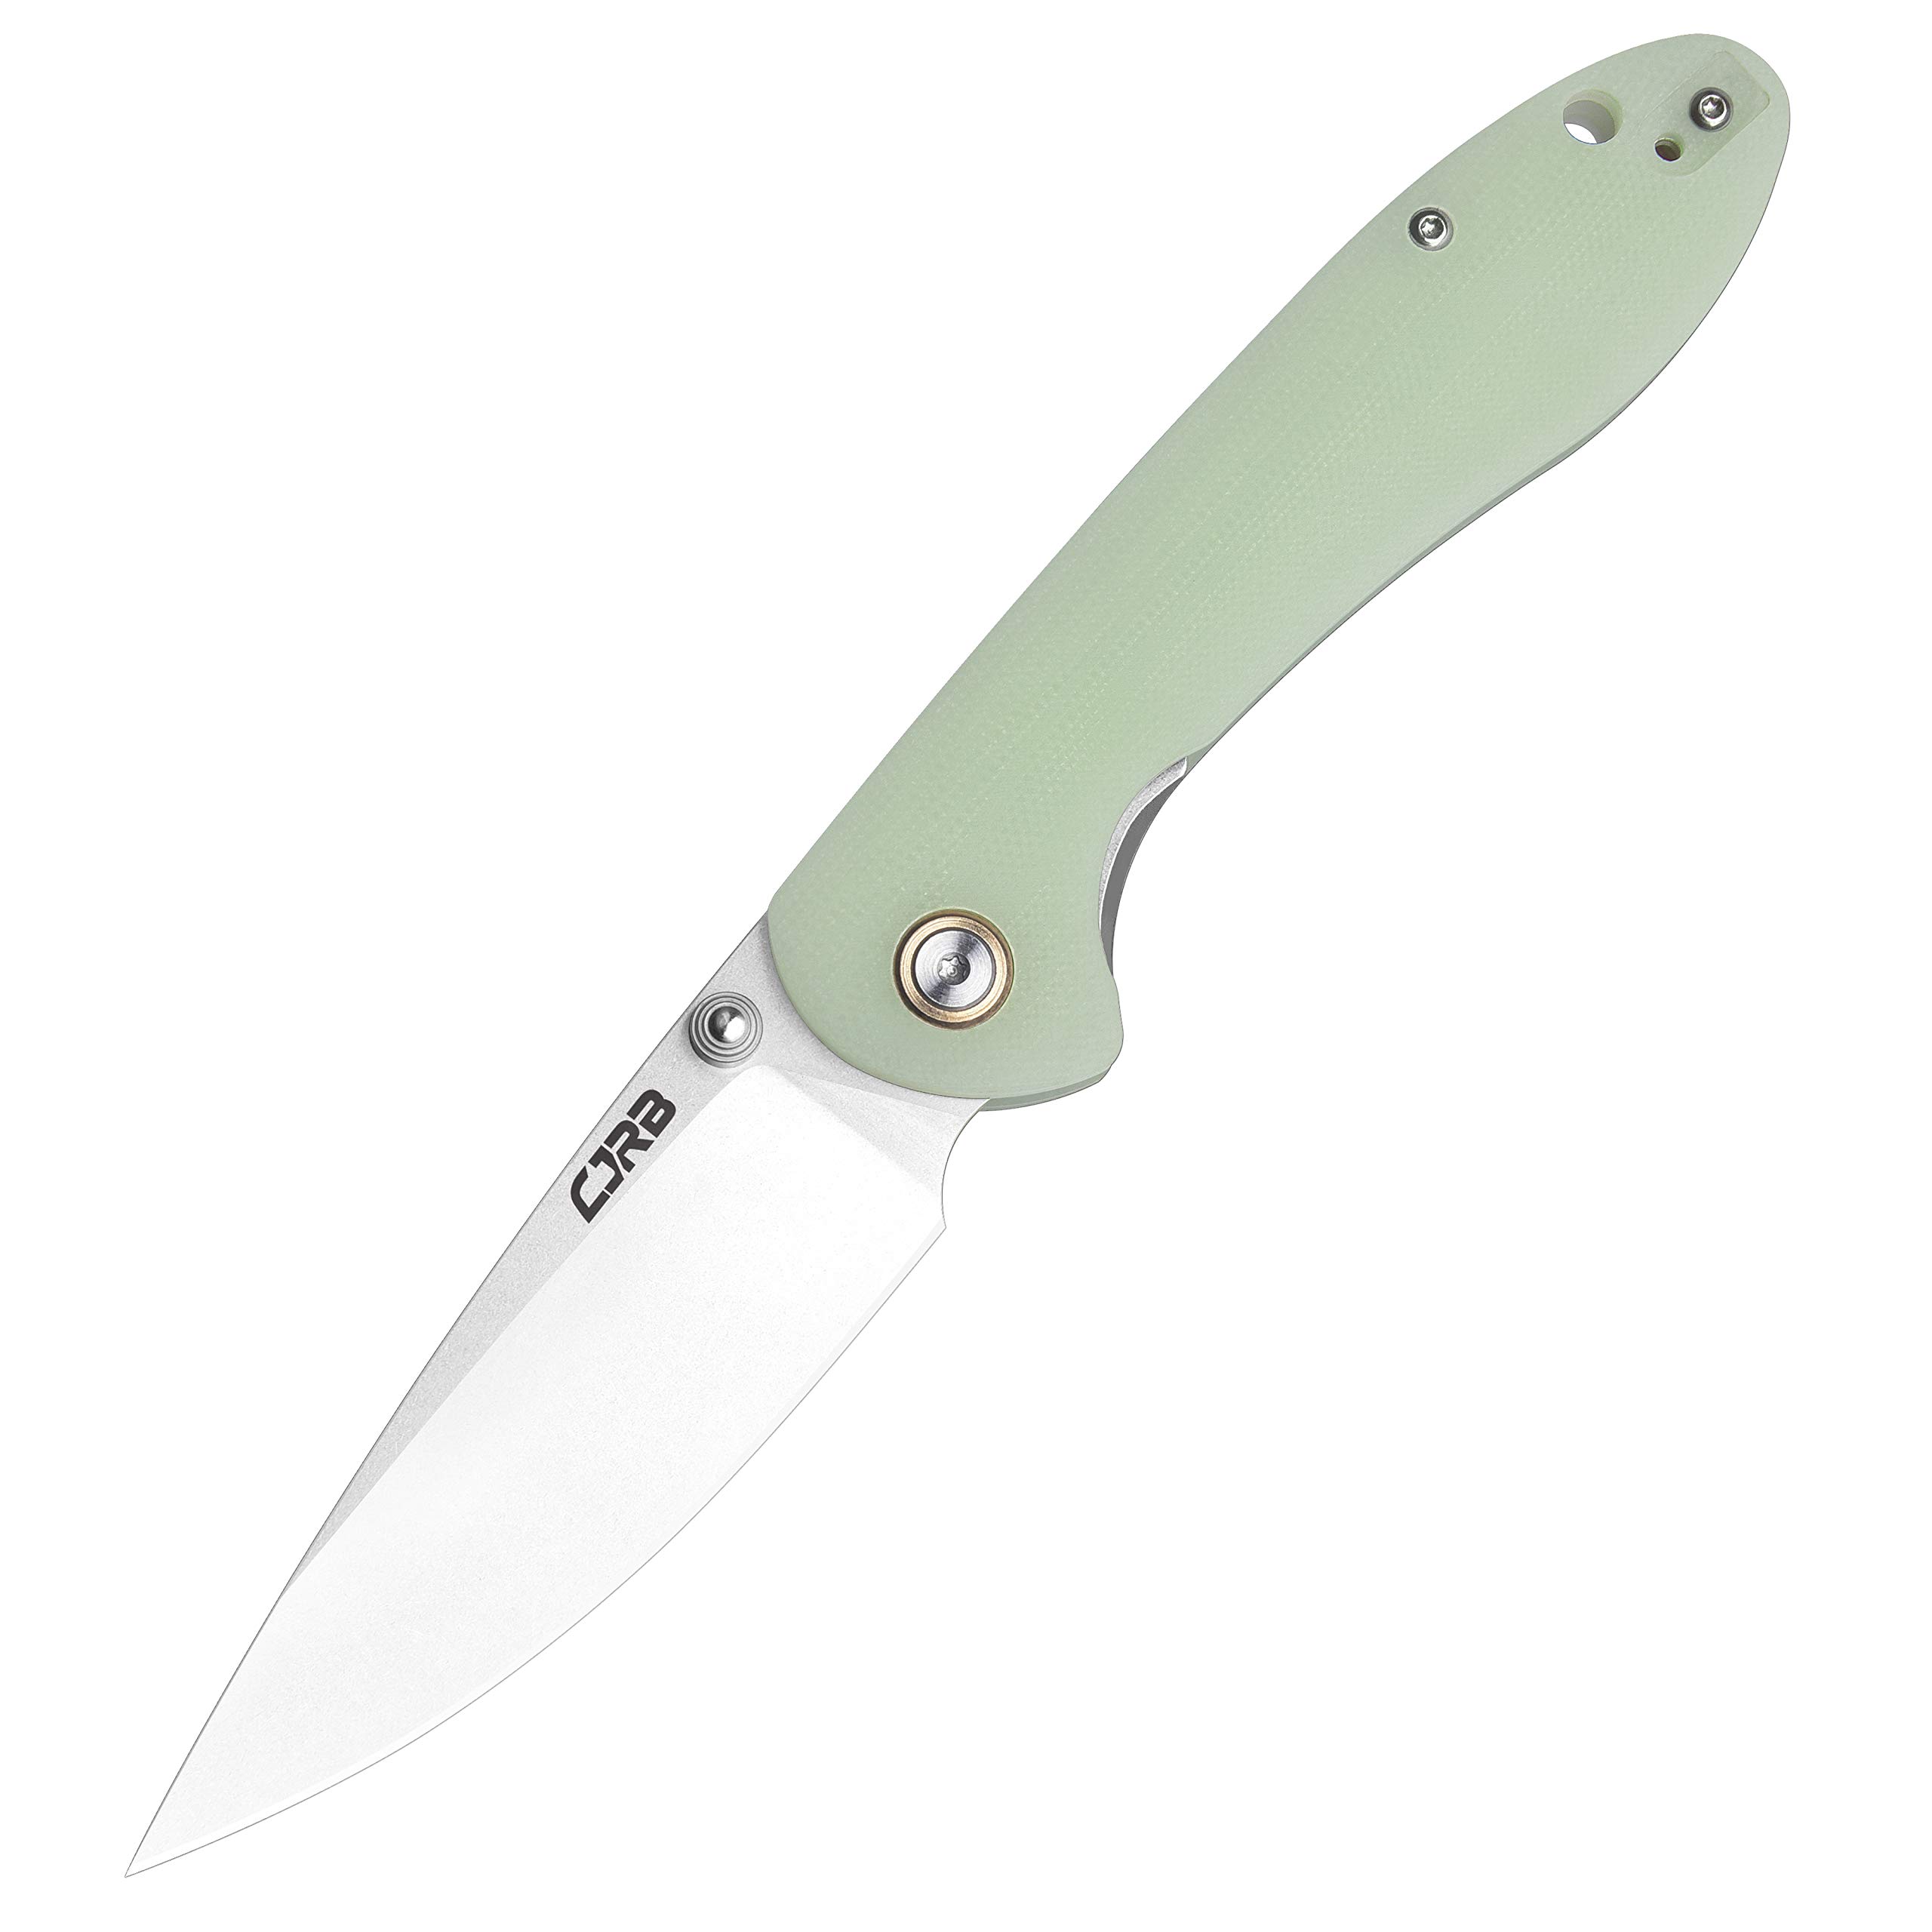 CJRB Feldspar Green Bundled with Small Green Great EDC Knife Companion